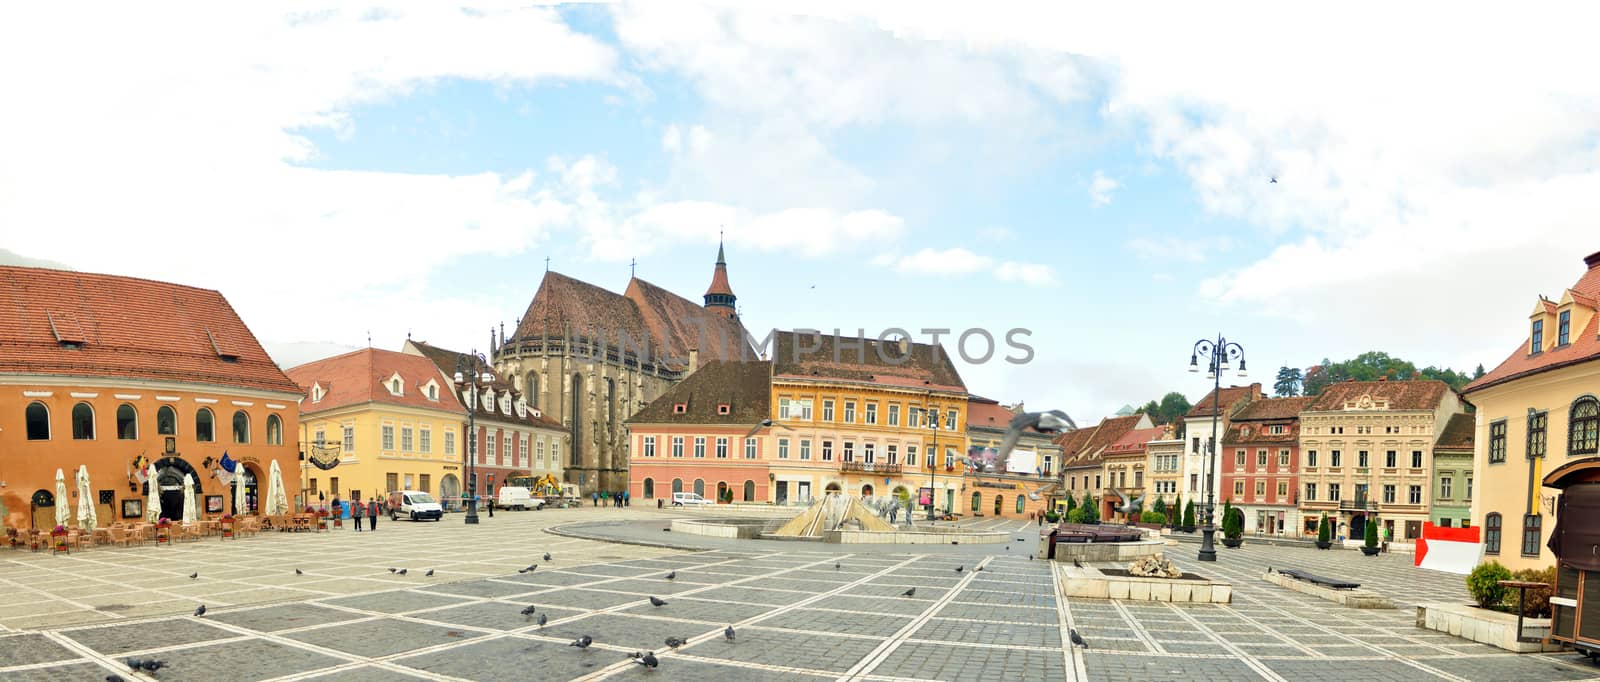 brasov city council square by tony4urban